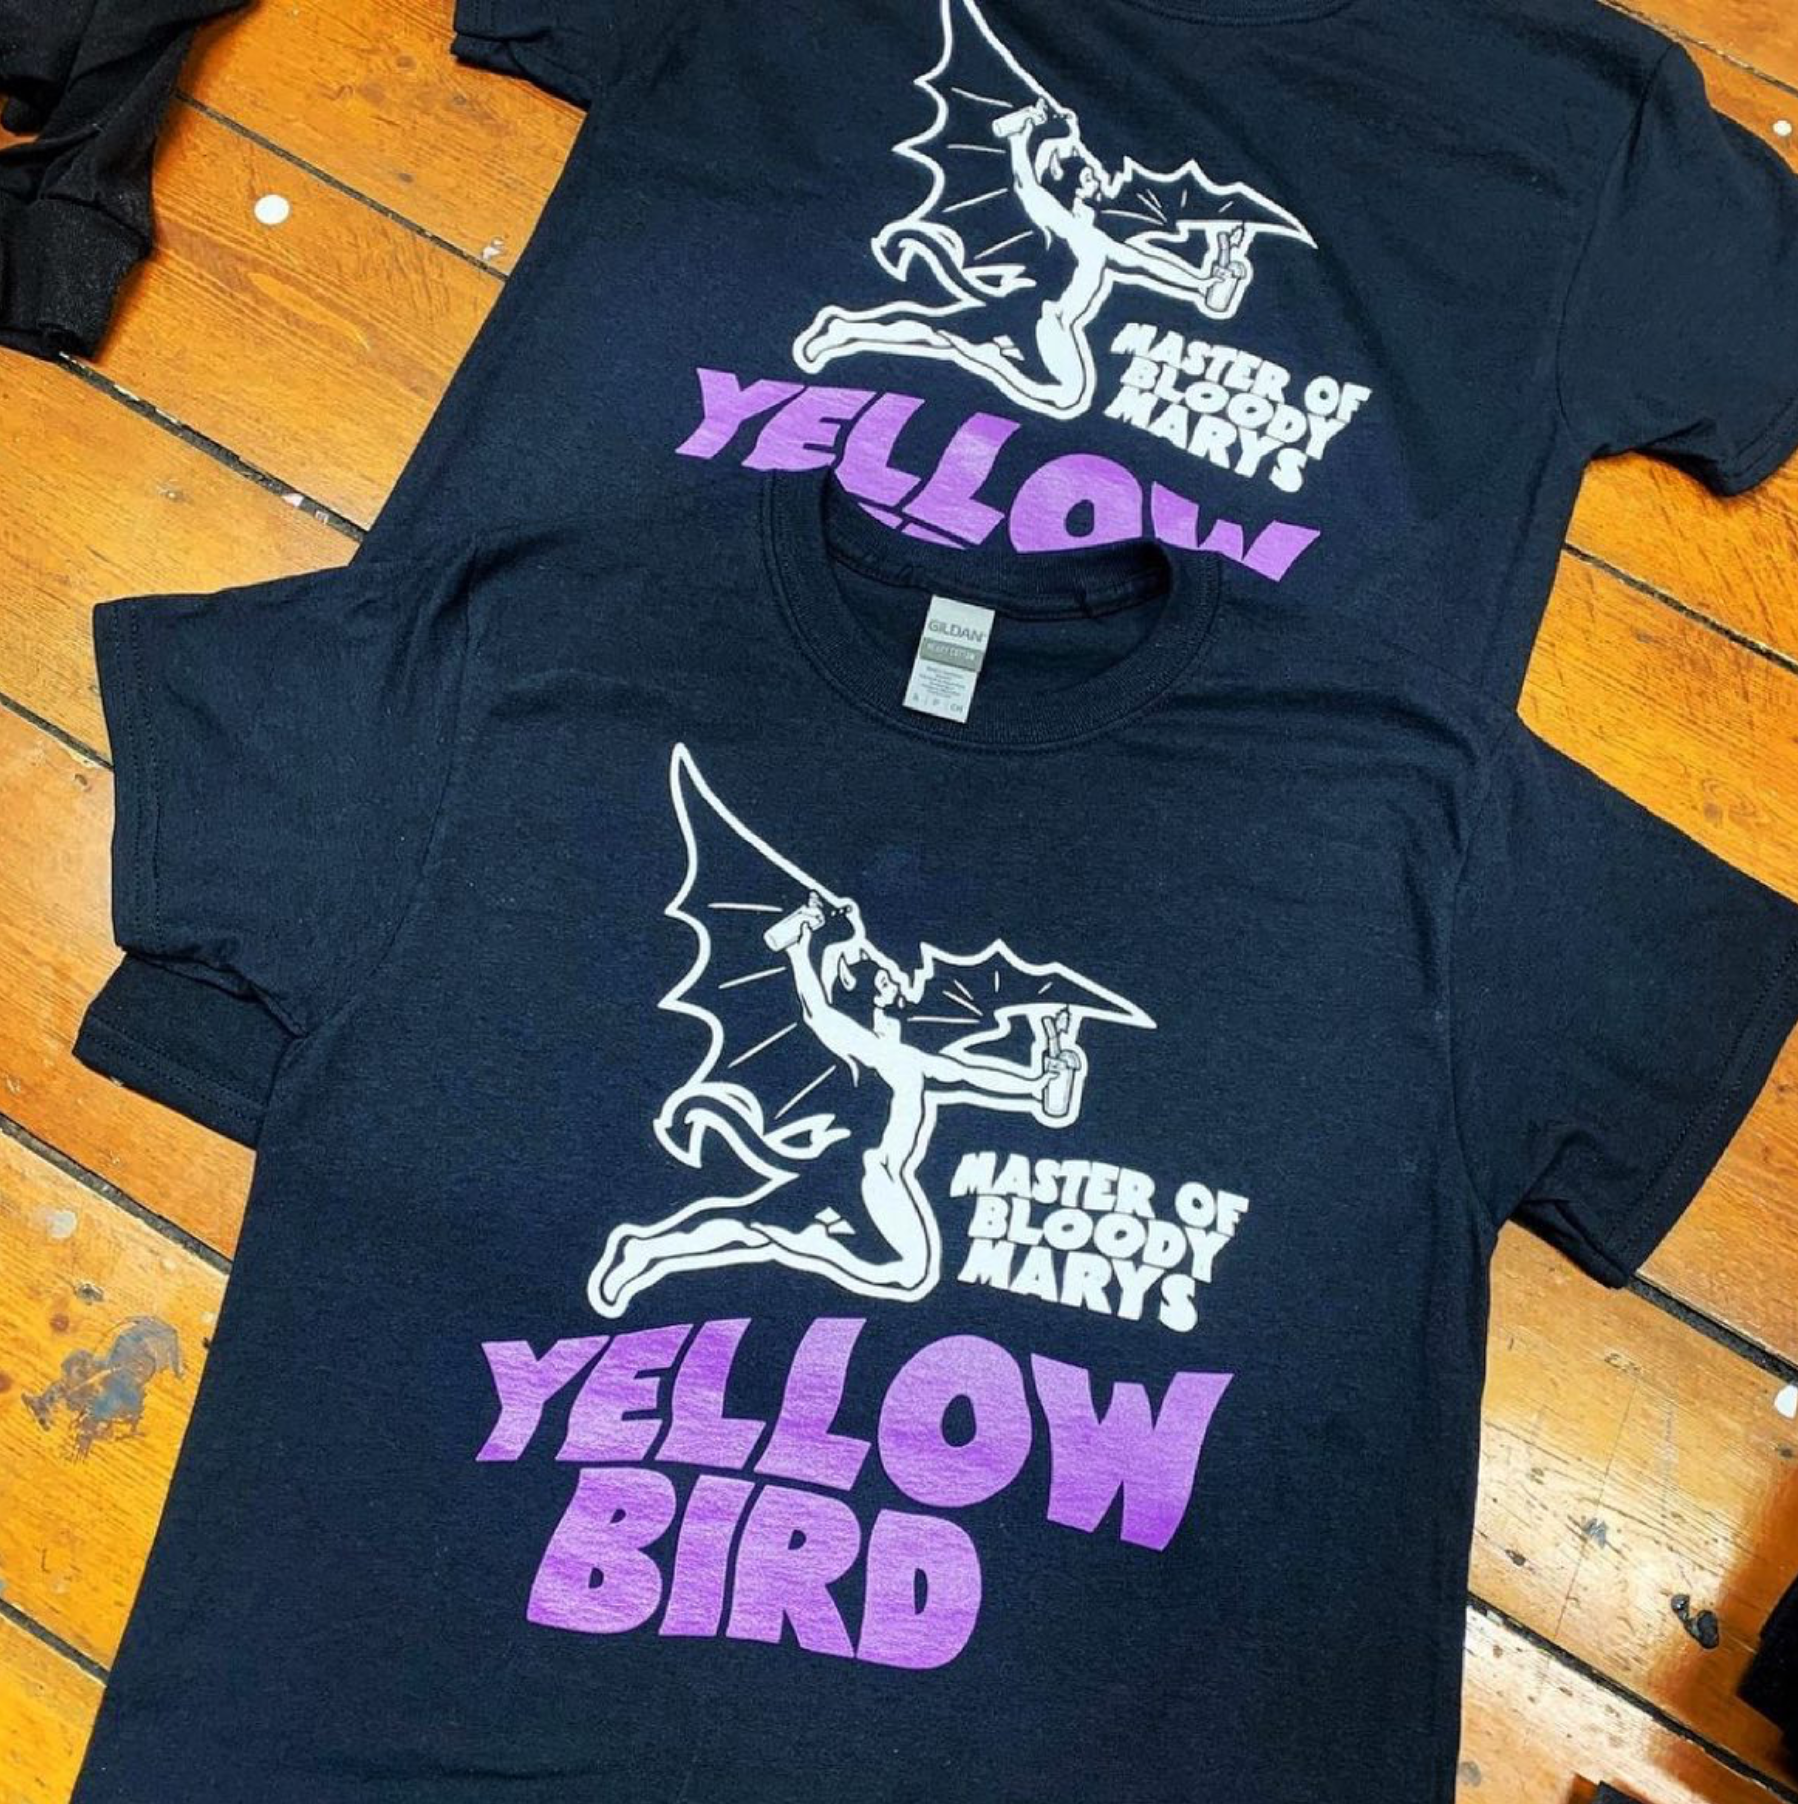 Yellow_Bird_Sabbath_Mary_T-shirt_On_Table